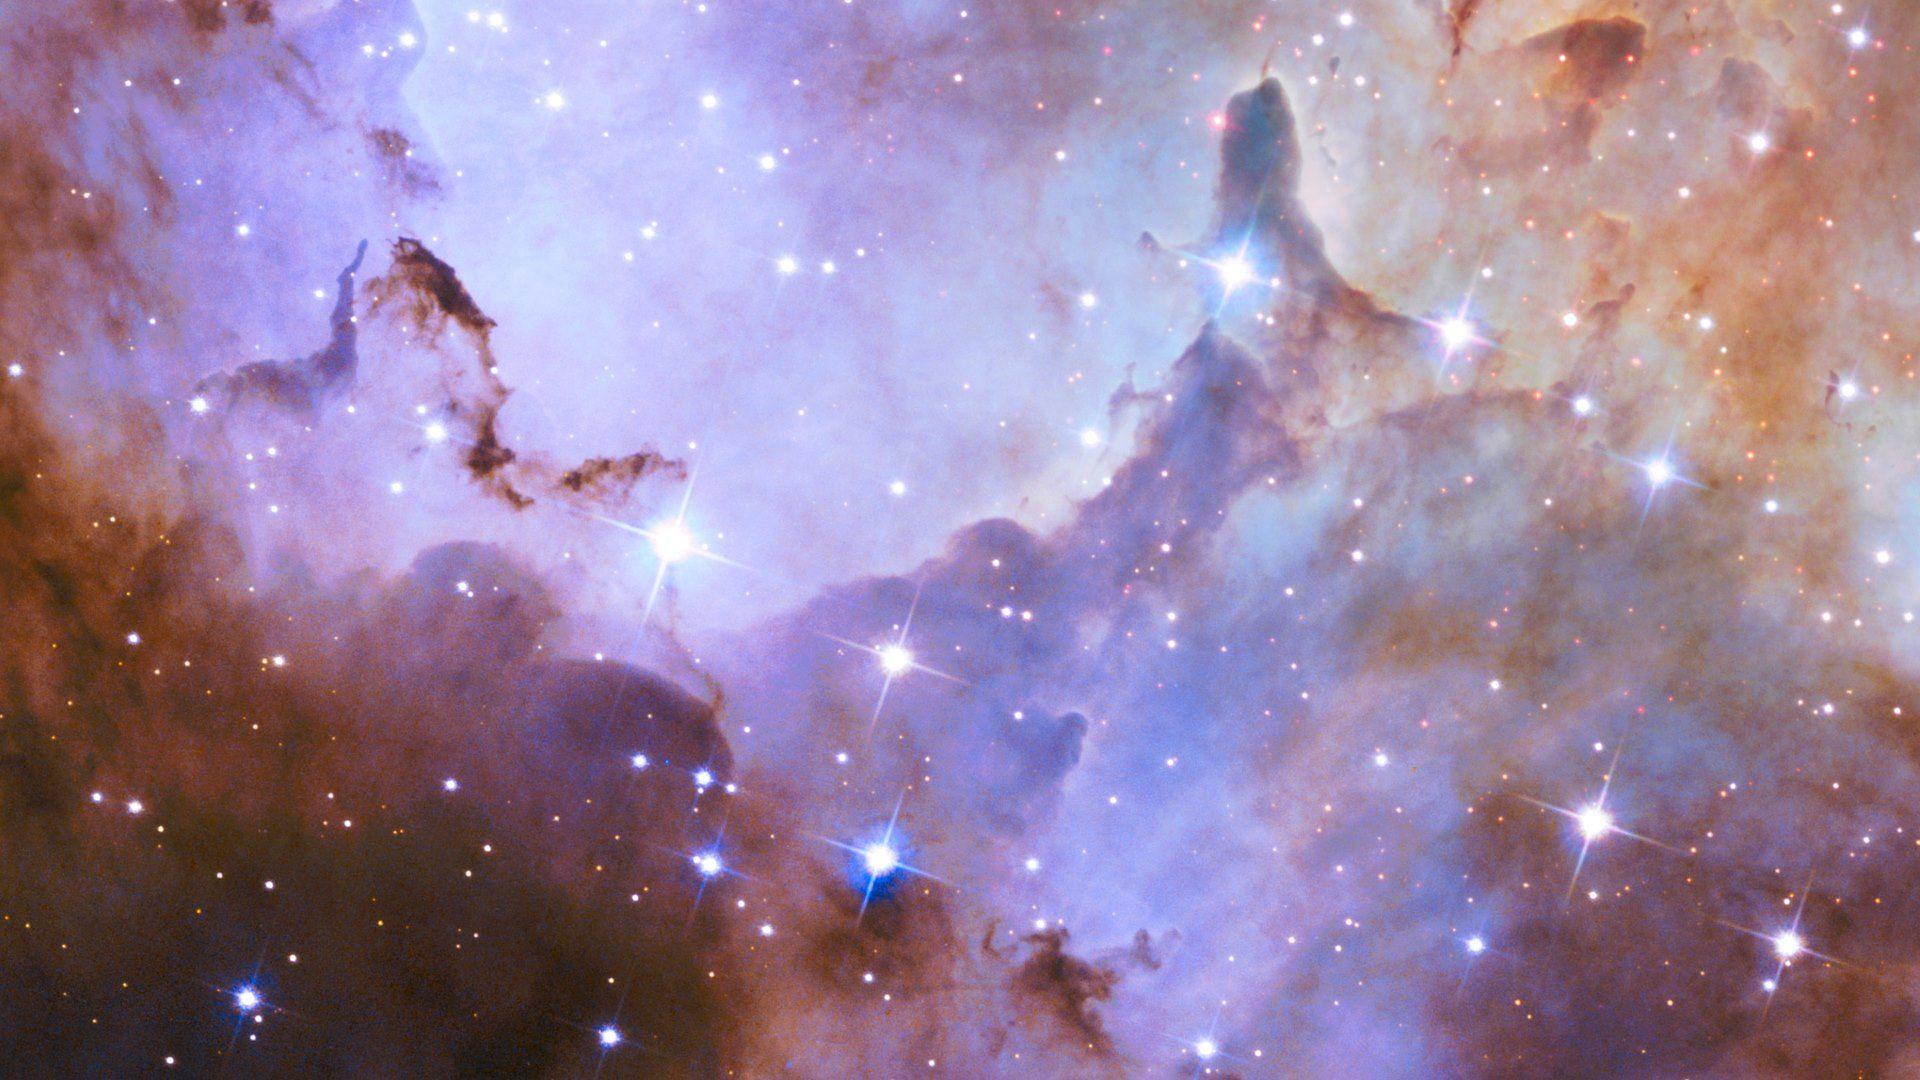 Hubble Space Telescope Celebrates 25 Years HD Wallpaper. 4K. Space